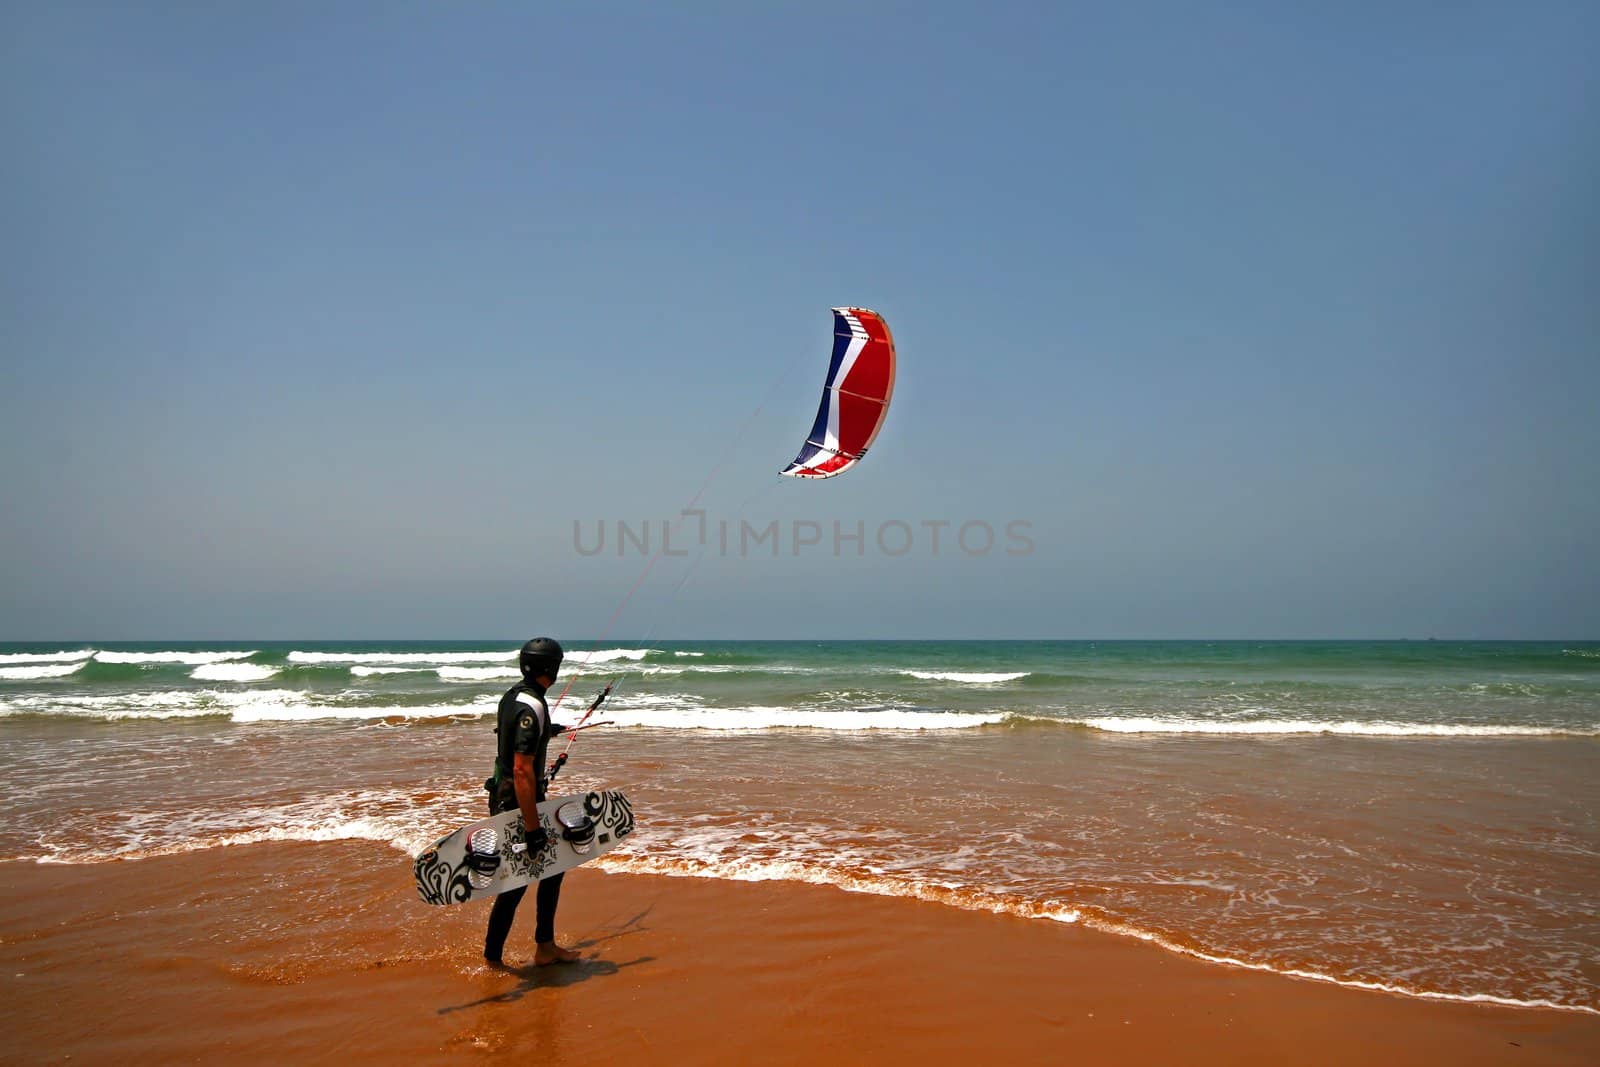 Kite surfer by Marko5